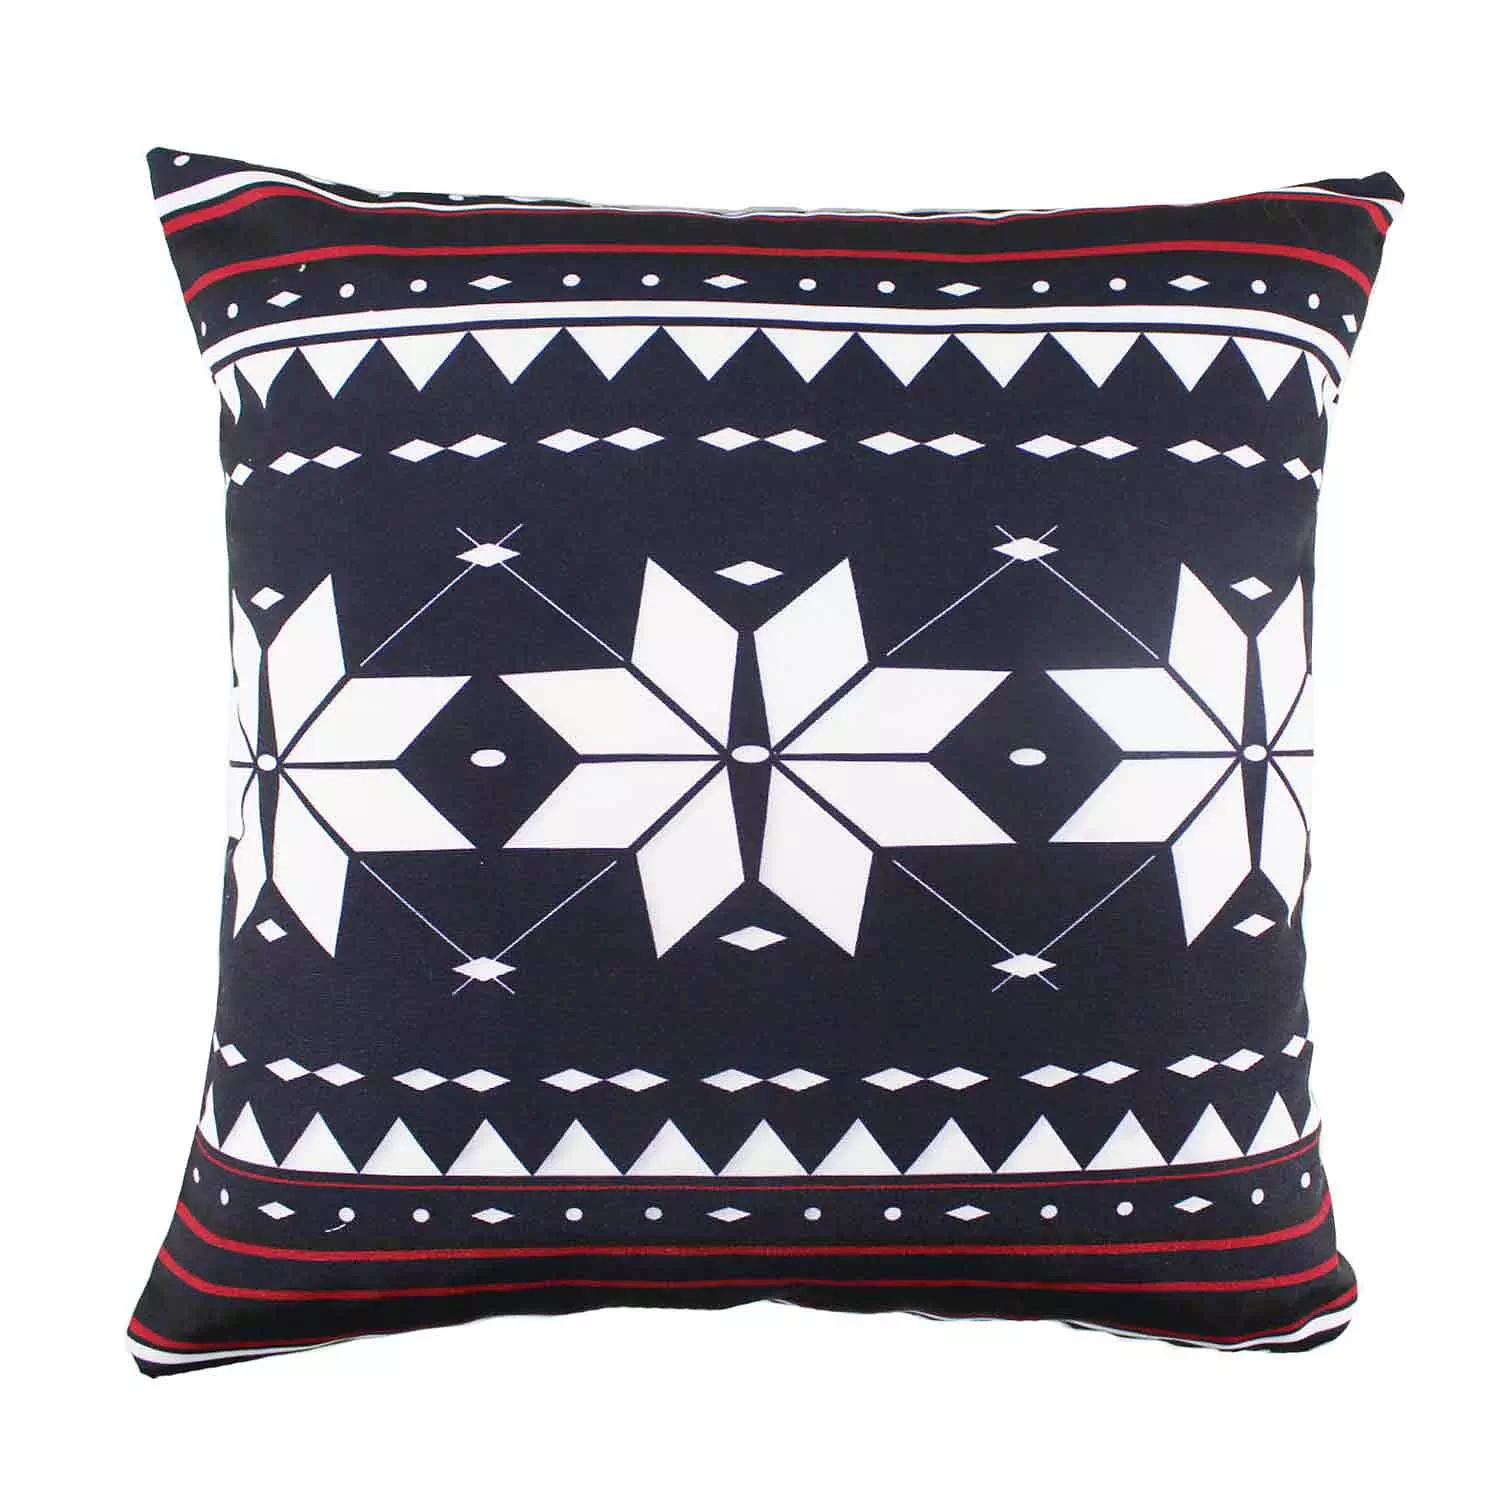 Snowflake pattern printed cushion, 18"x18", navy